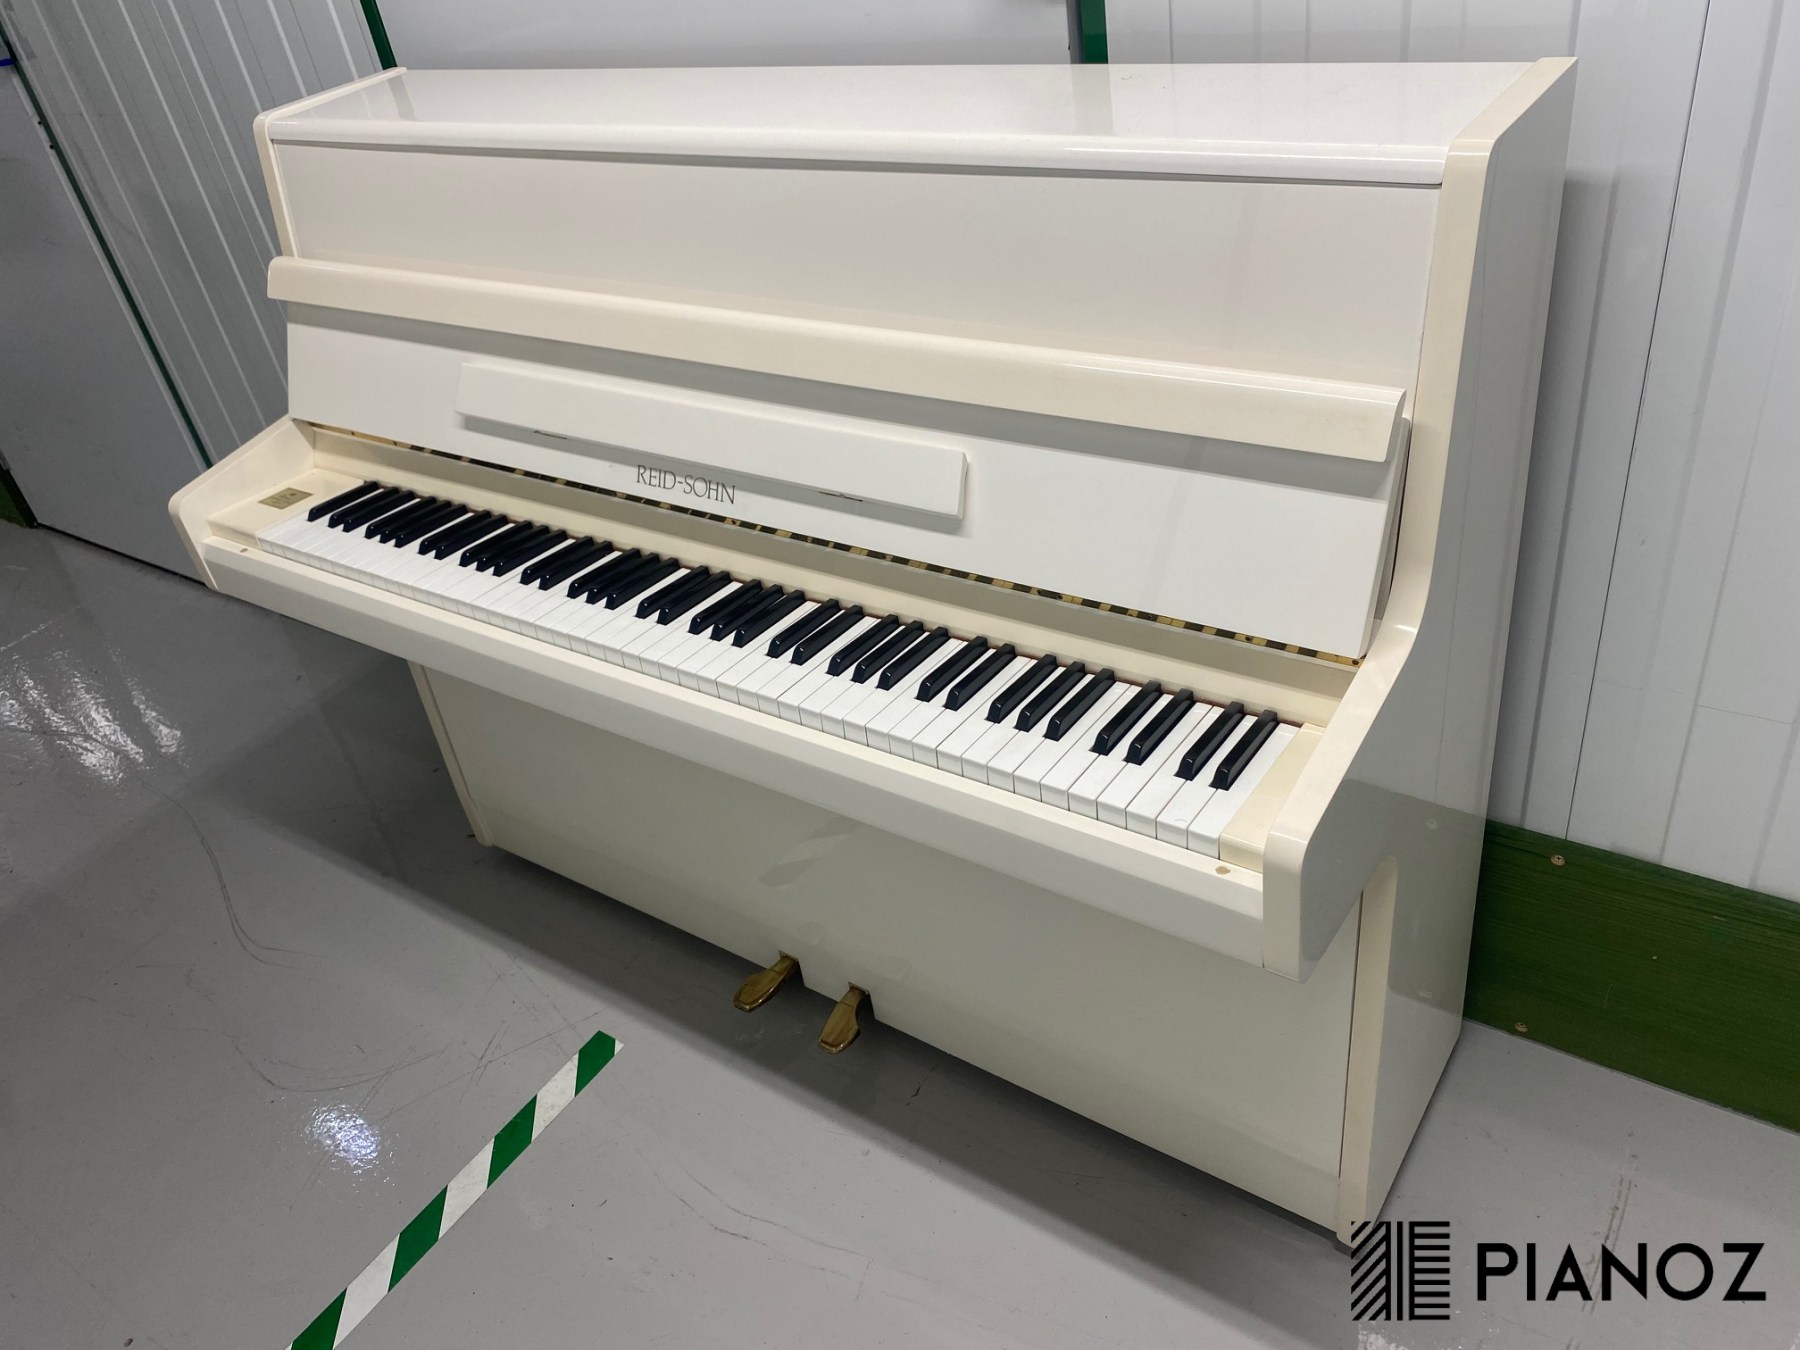 Reid Sohn White Upright Piano piano for sale in UK